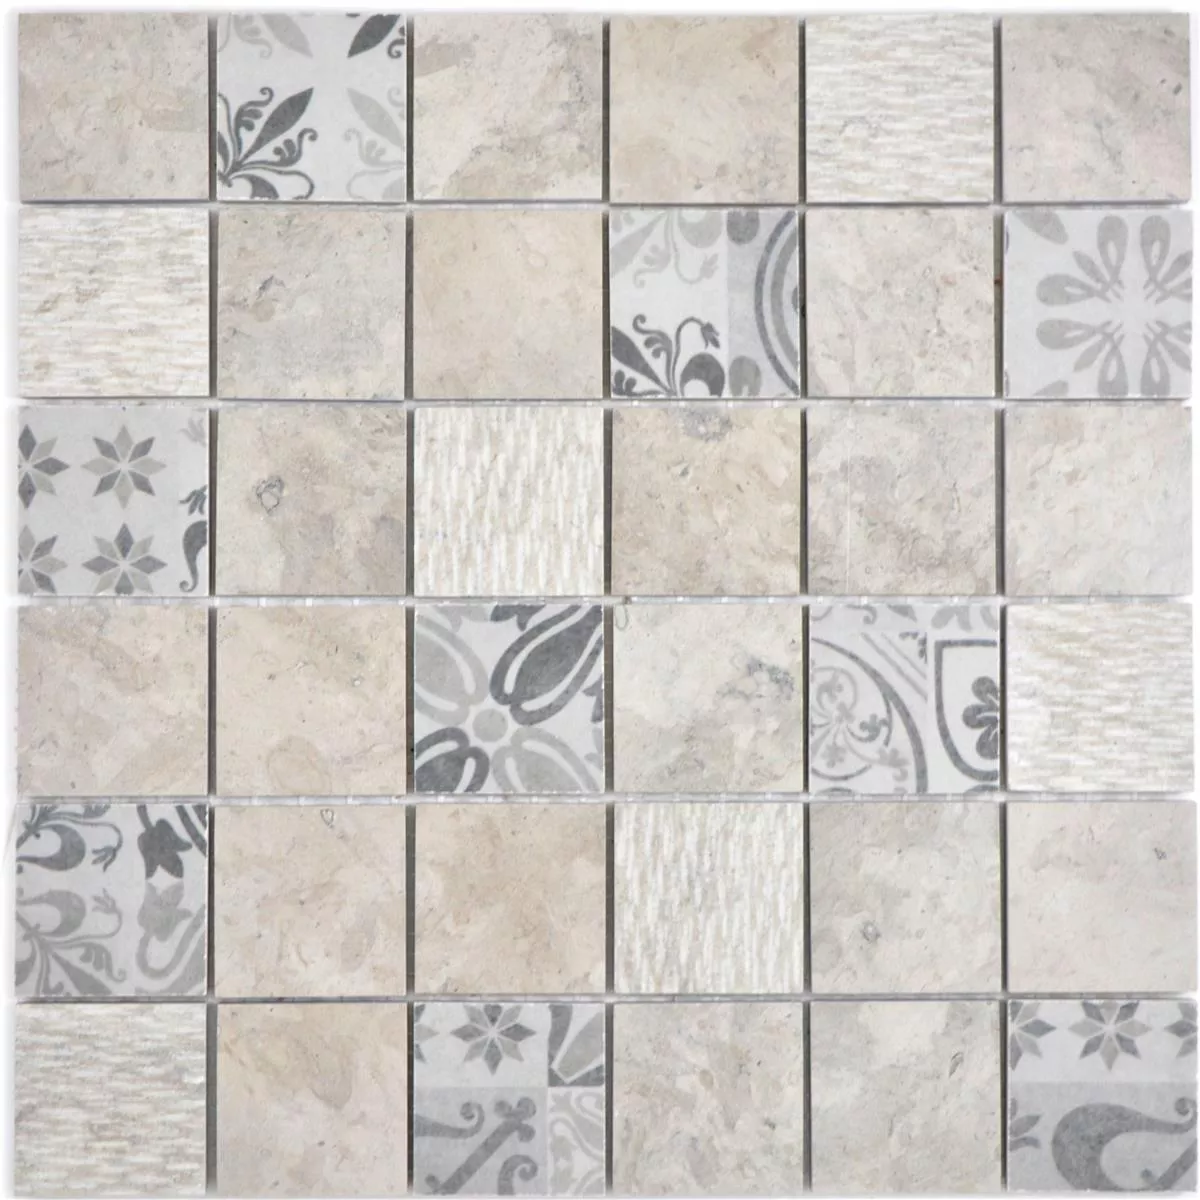 Sample Ceramic Mosaic Tiles Mythos Square Grey Beige